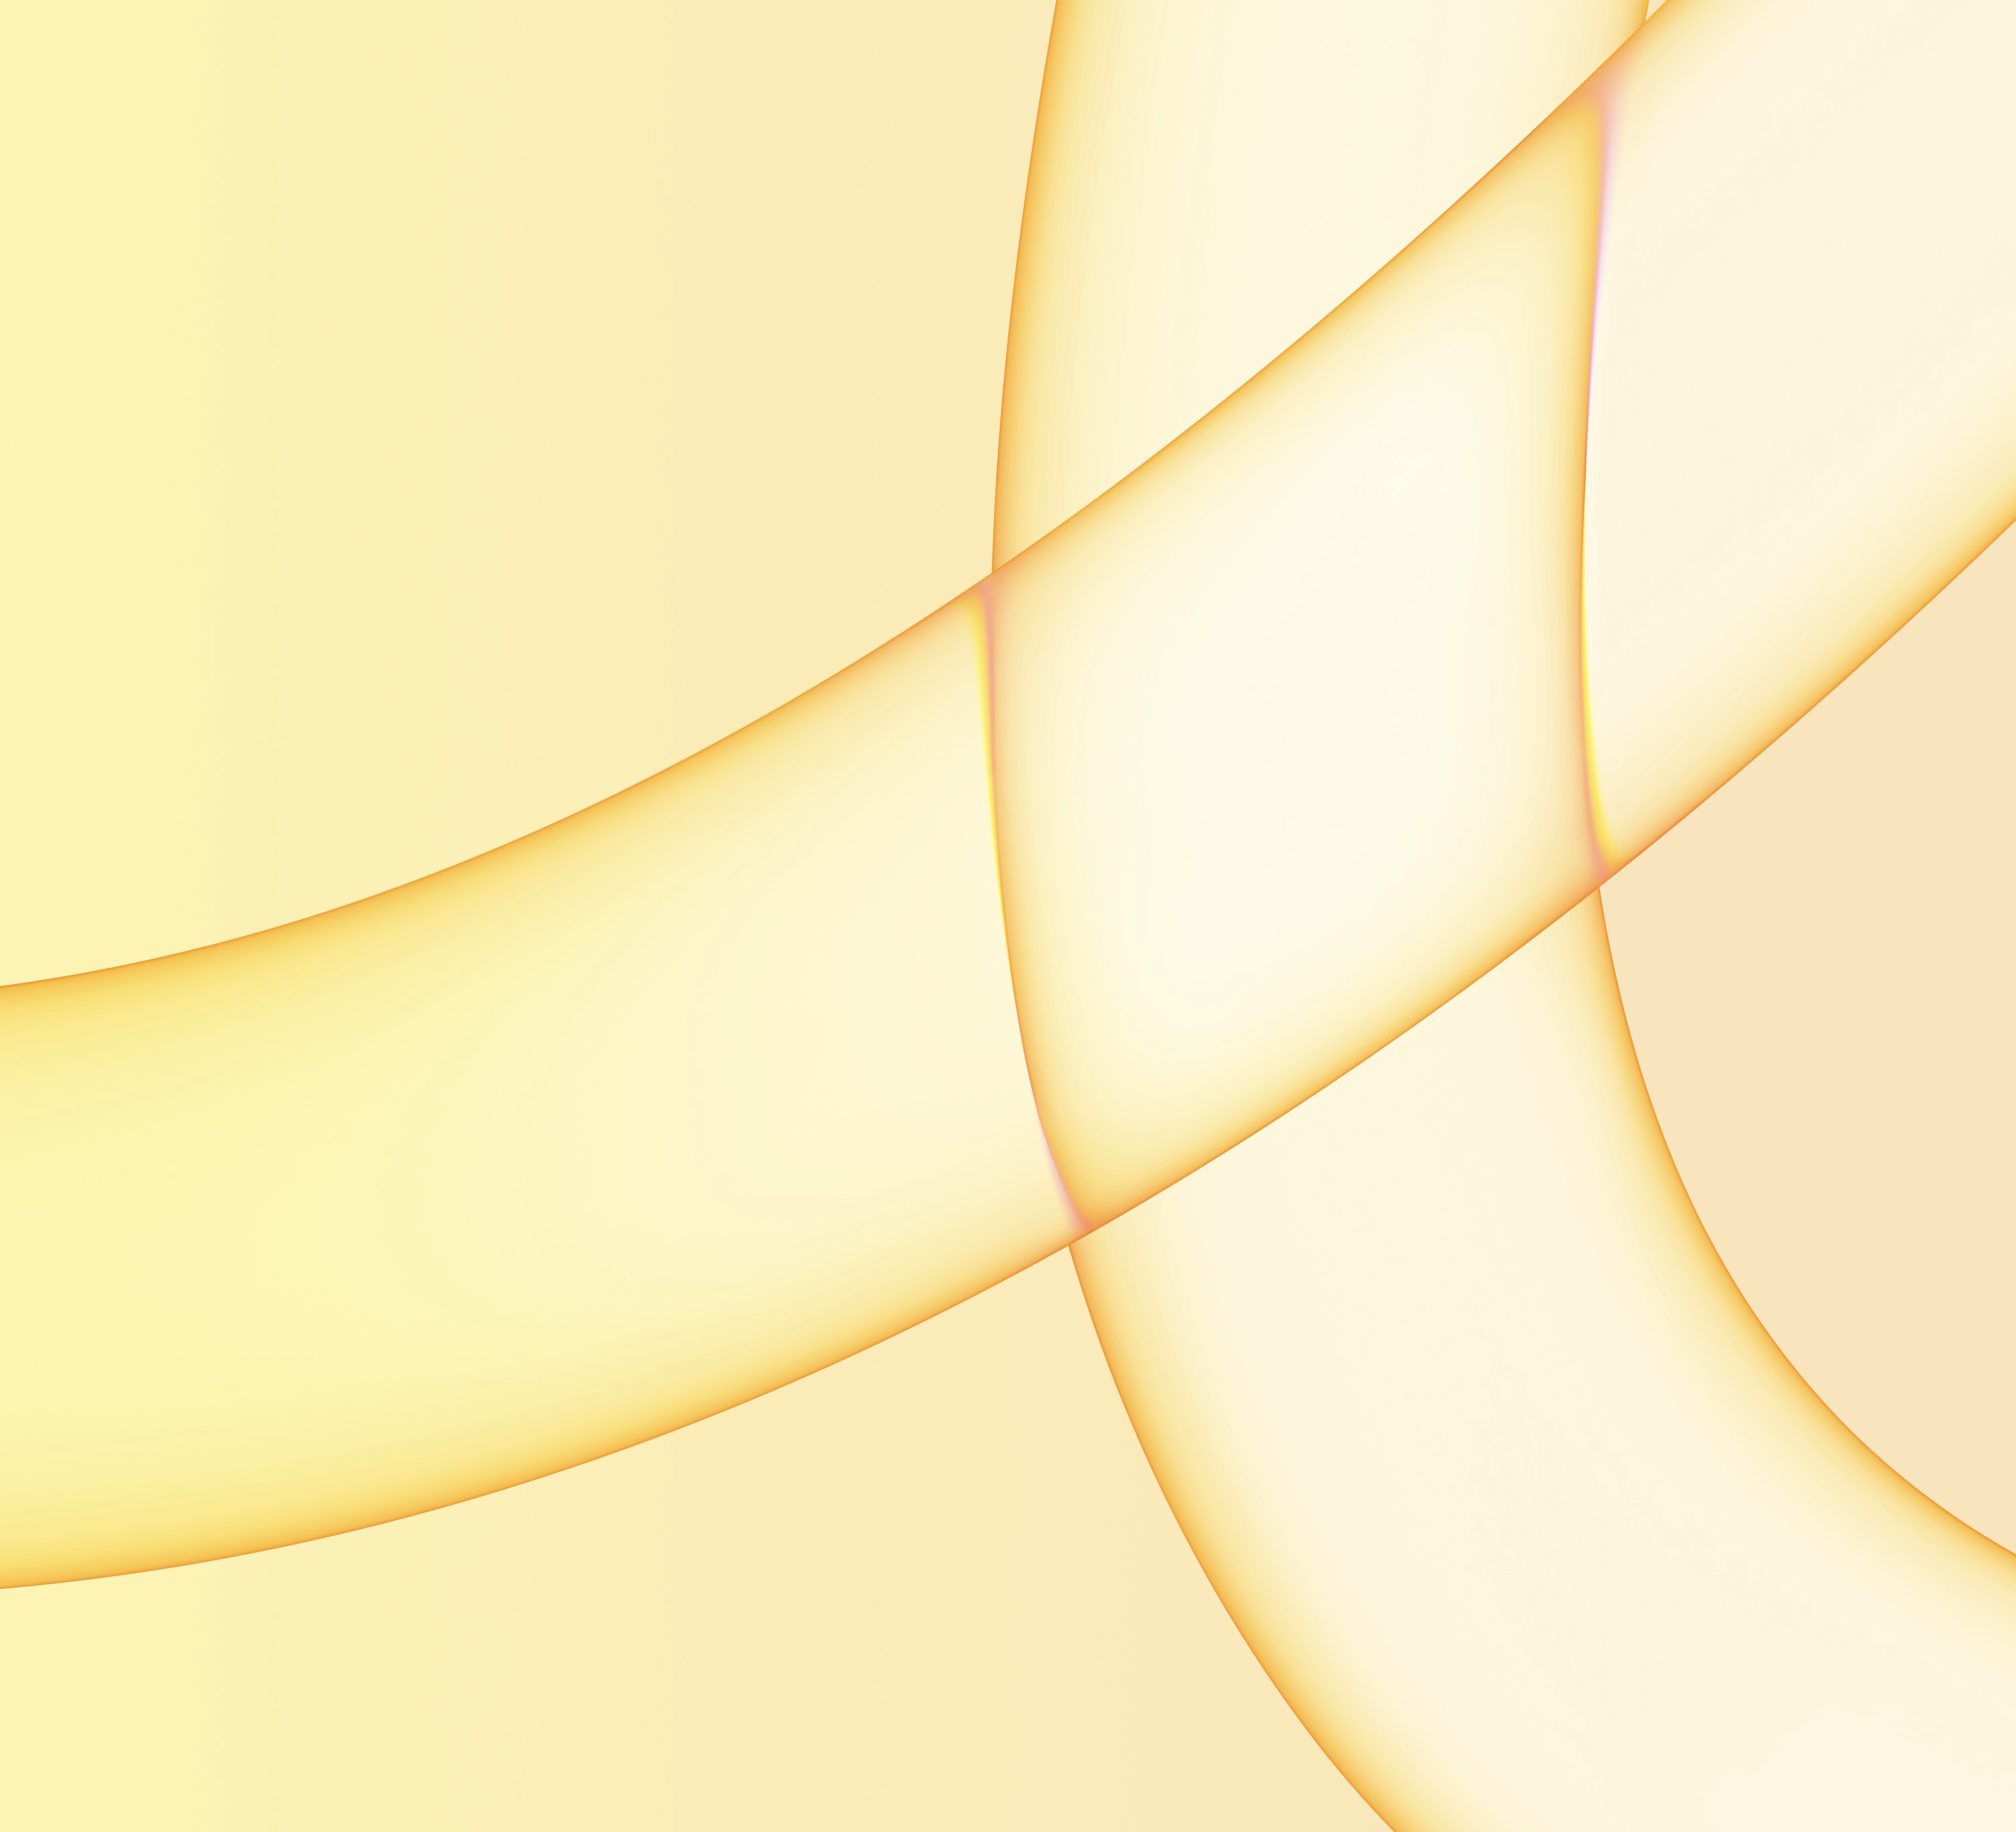 Yellow Wallpapers: Free HD Download [500+ HQ] | Unsplash